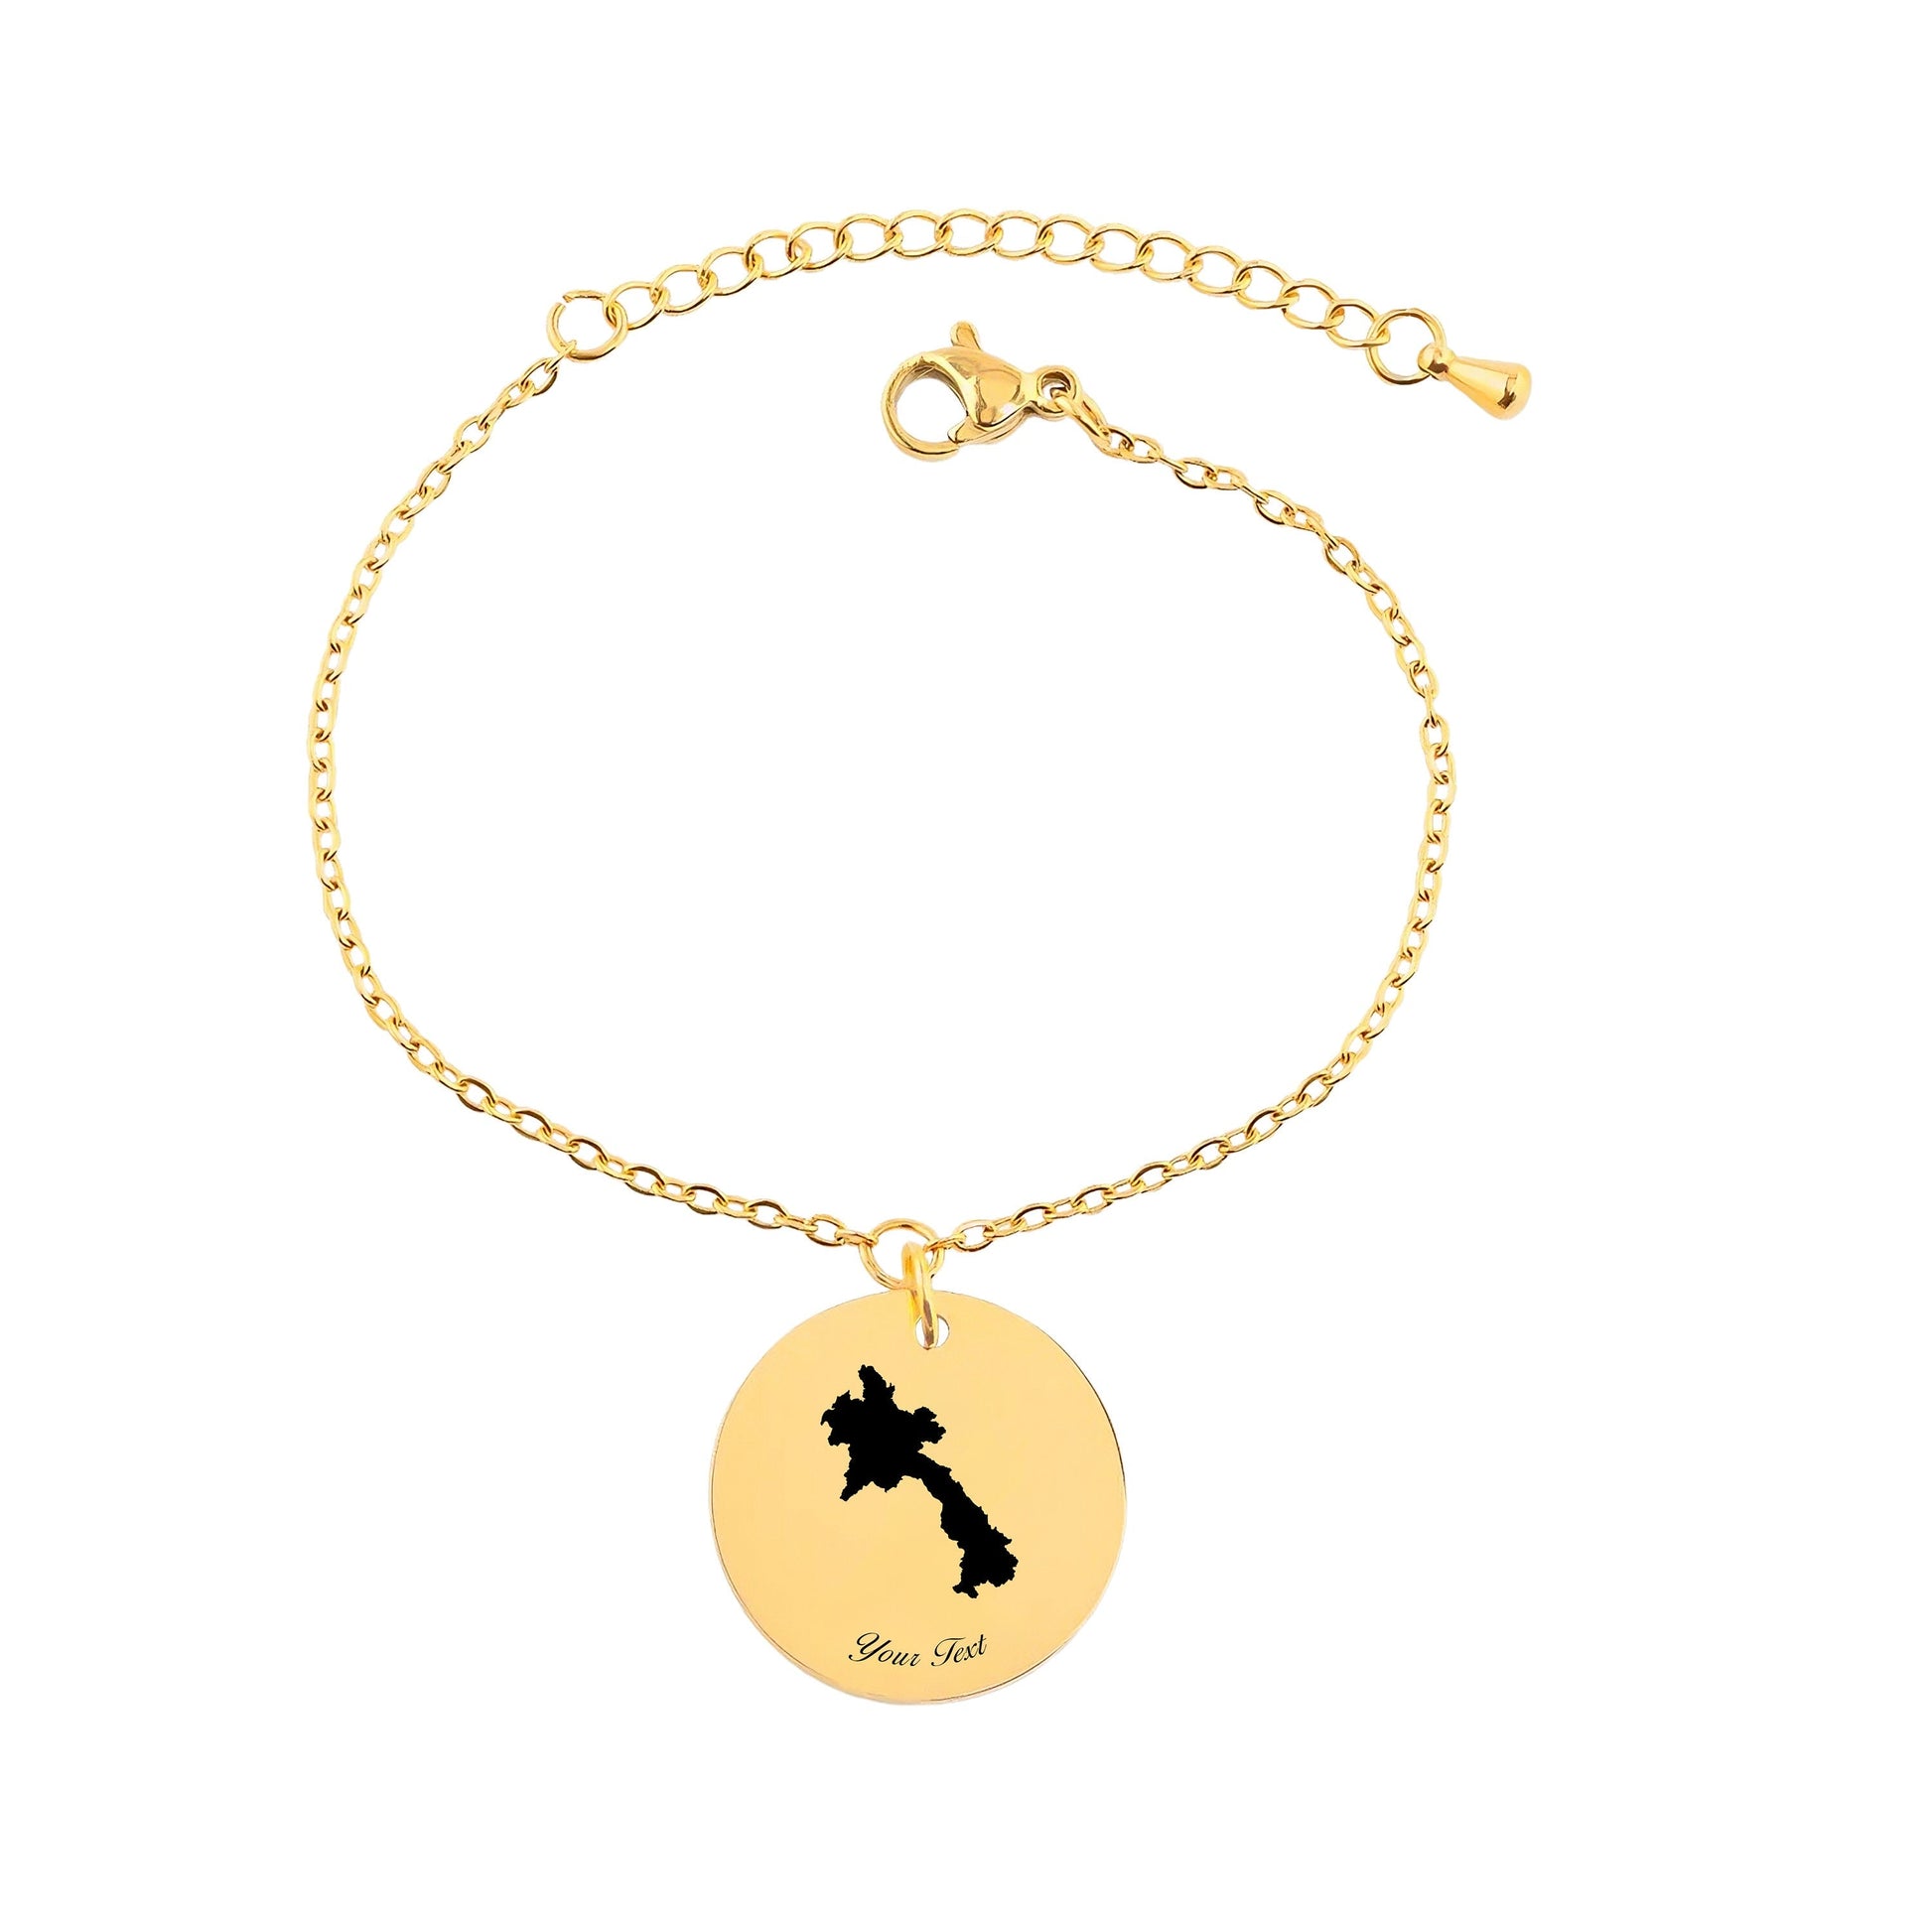 Laos Country Map Bracelet, Your Name Bracelet, Minimalist Bracelet, Personalized Gift, 14K Gold Bracelet, Gift For Him Her